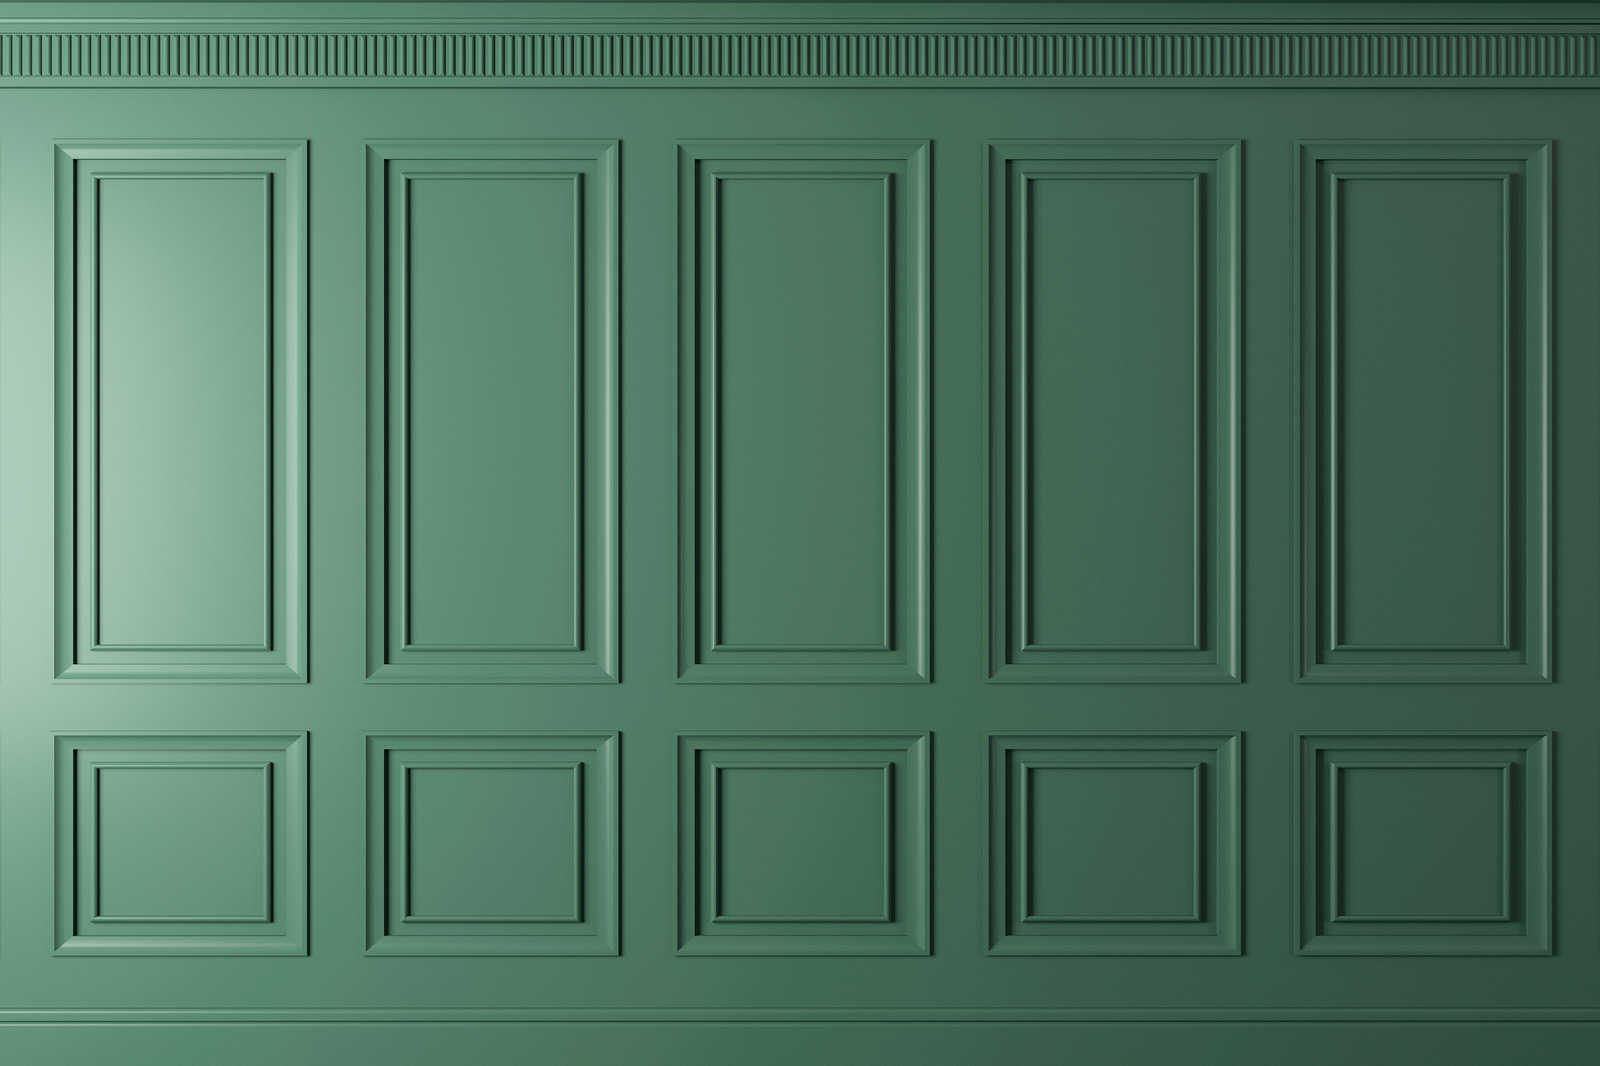             Kensington 1 - 3D toile lambris bois vert sapin - 1,20 m x 0,80 m
        